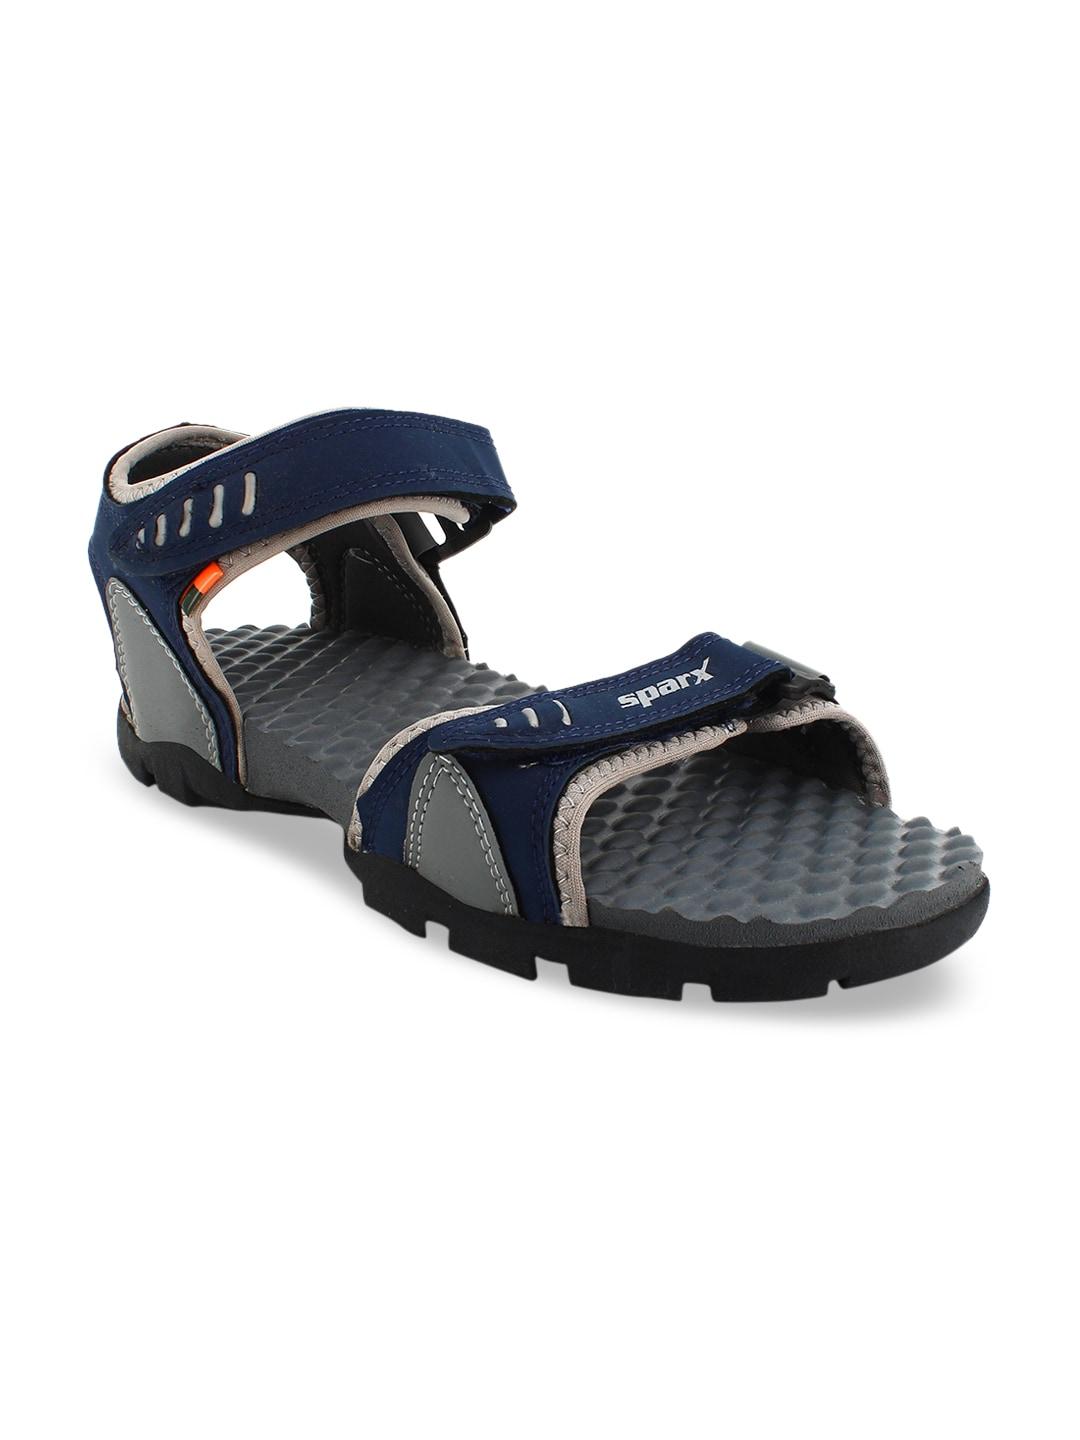 sparx-men-navy-blue-&-grey-solid-leather-sports-sandals